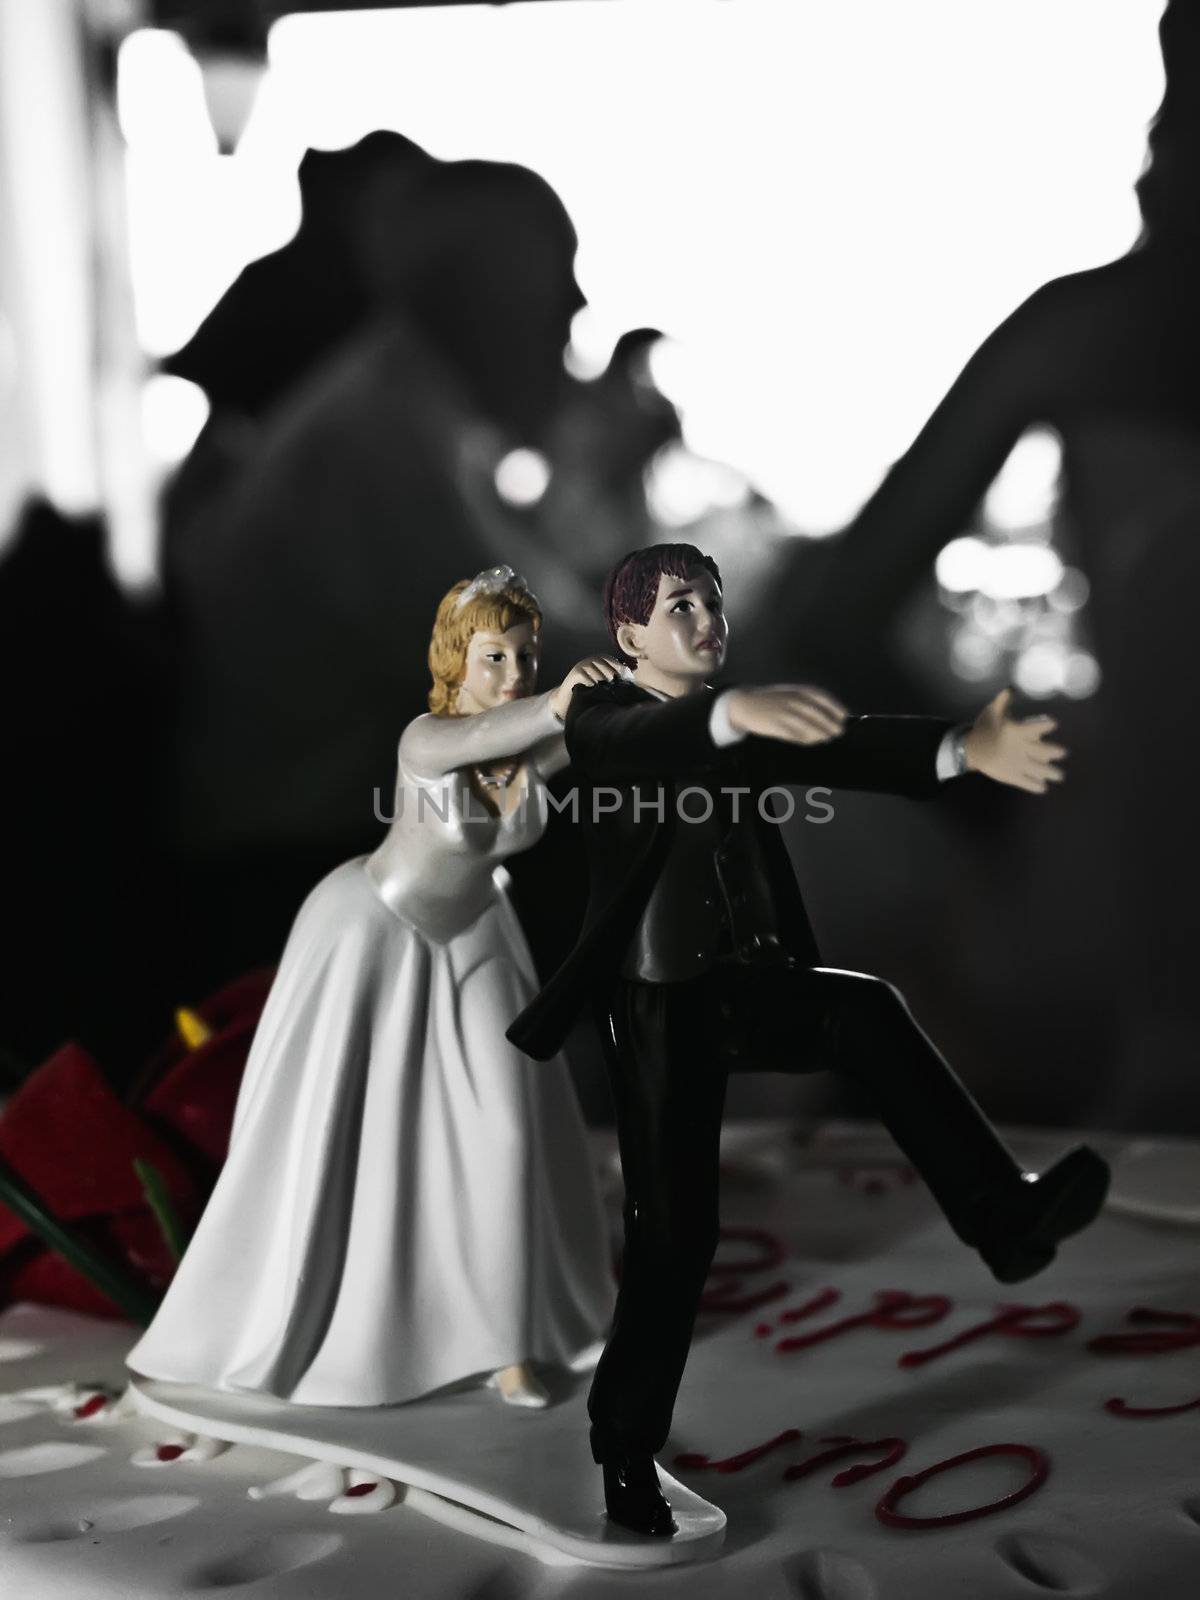 Wedding Cake Detail by PhotoWorks